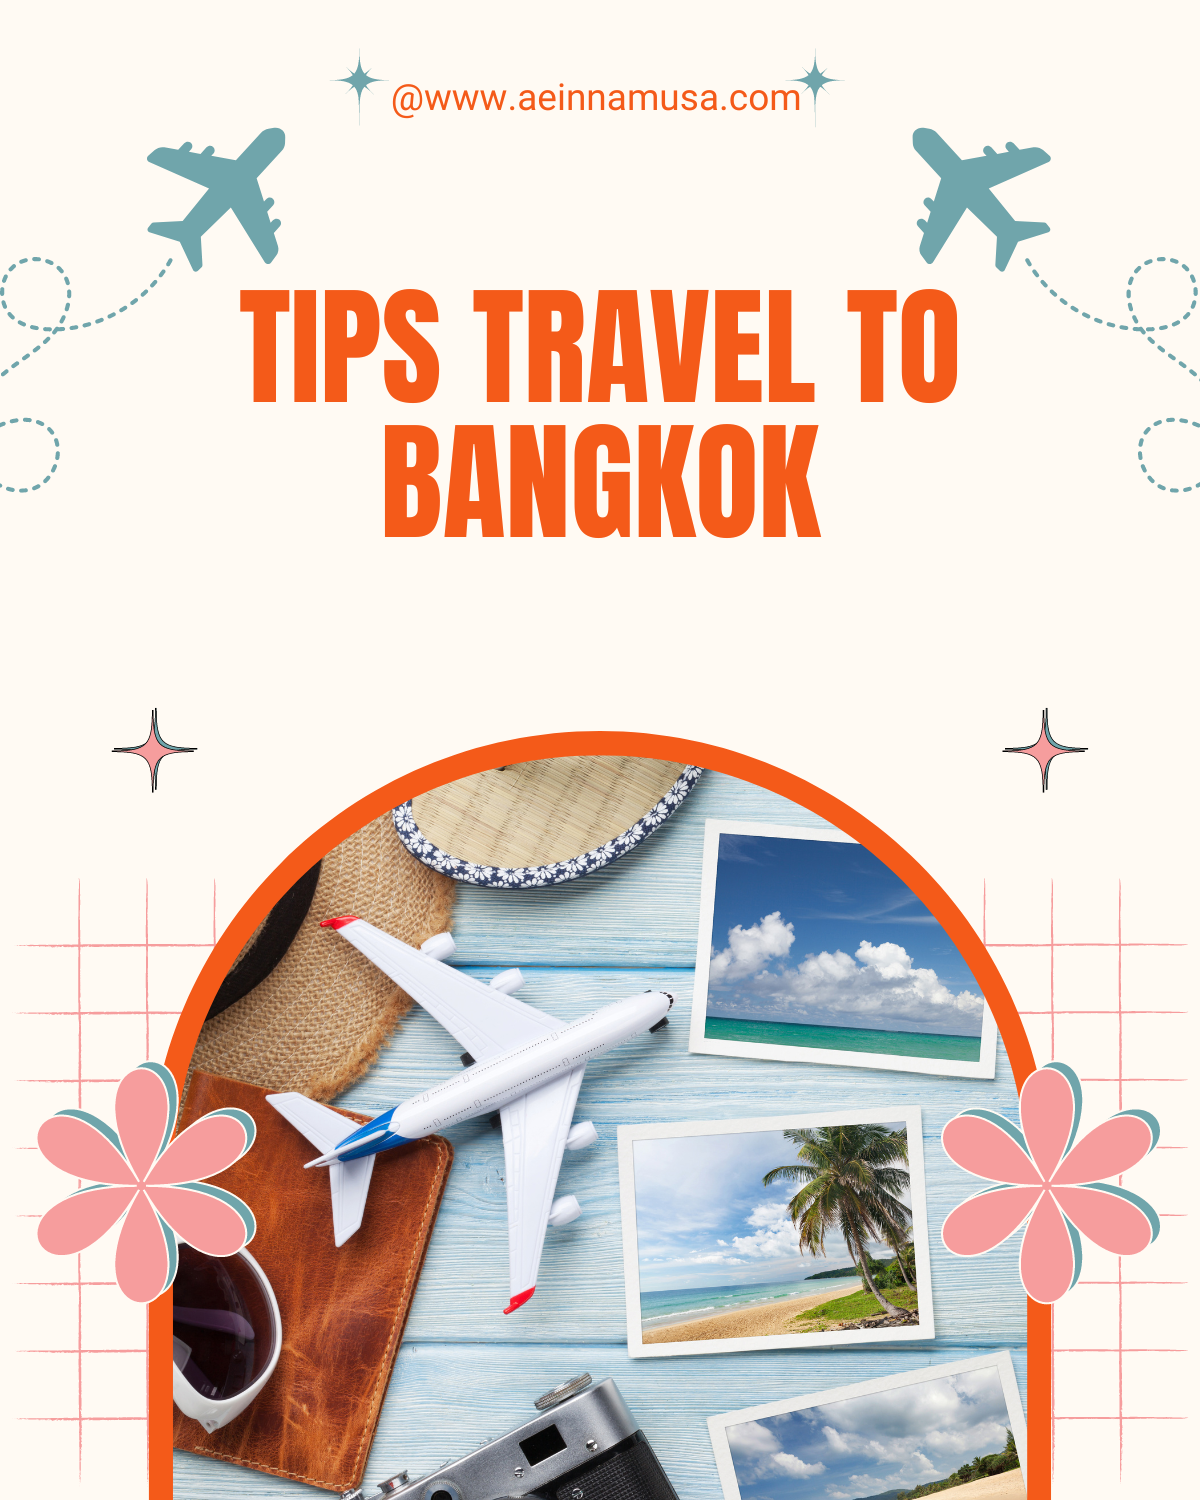 Tips Travel to Bangkok